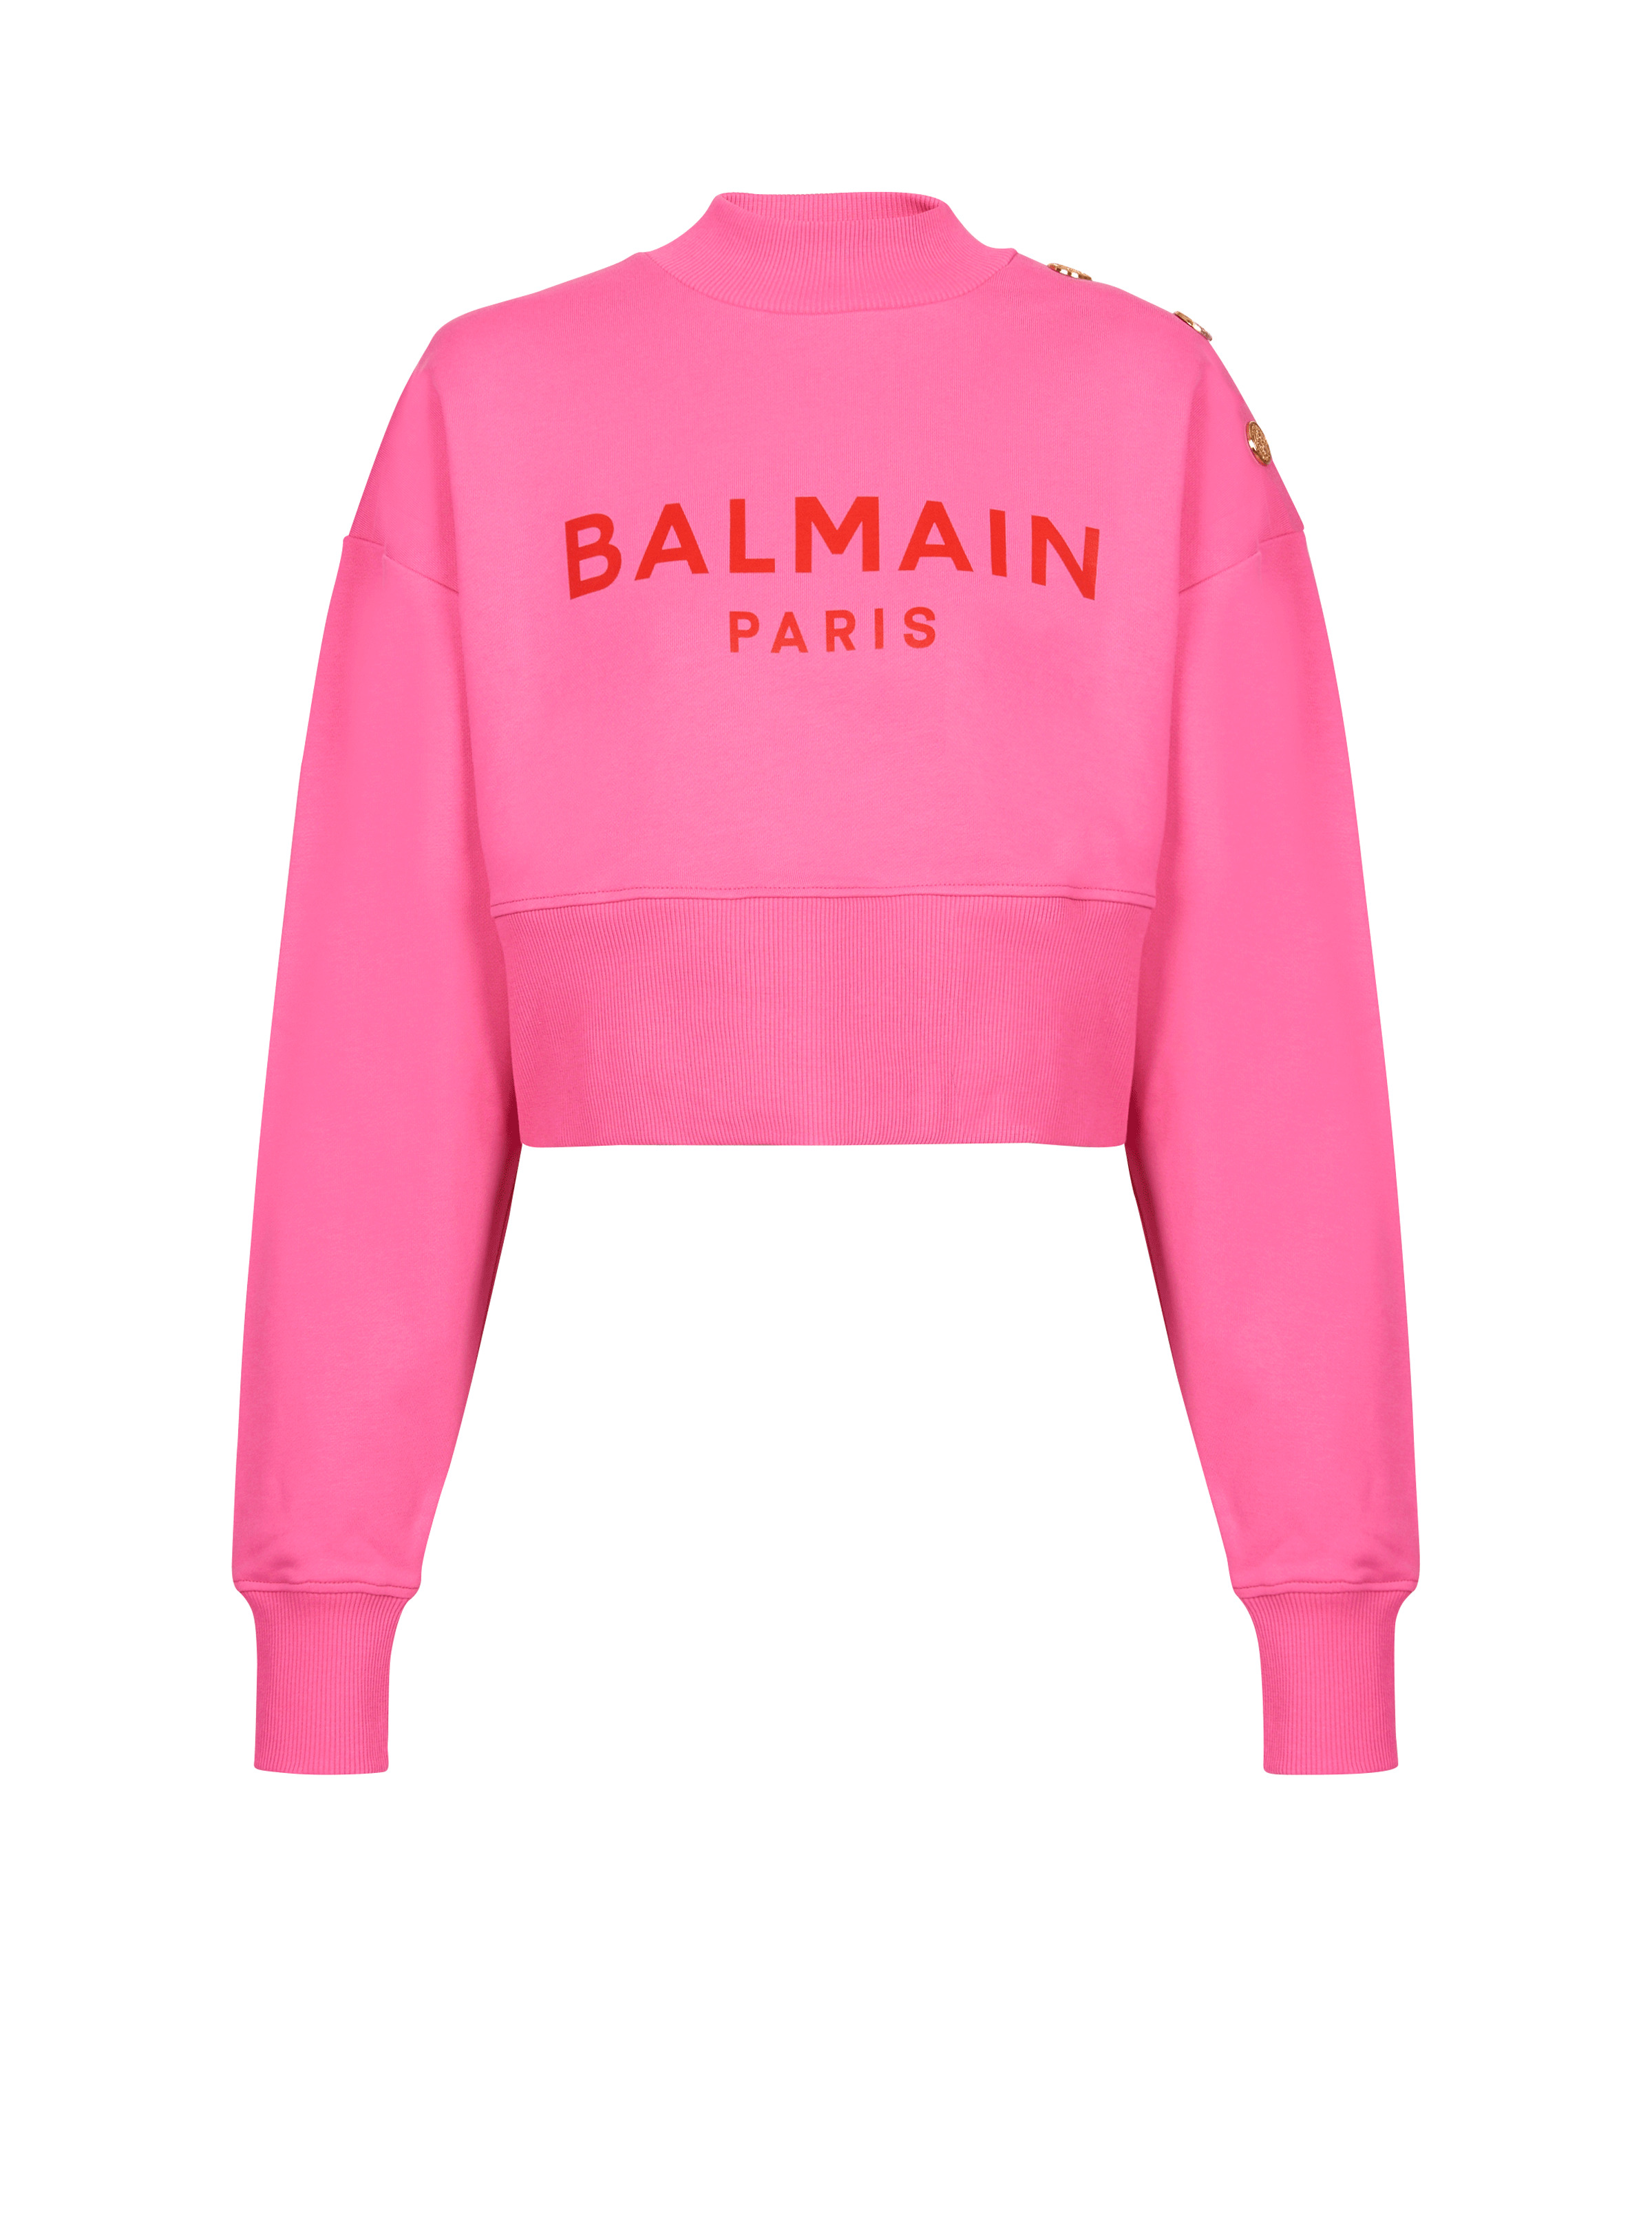 Cropped sweatshirt with Balmain Paris print - 1